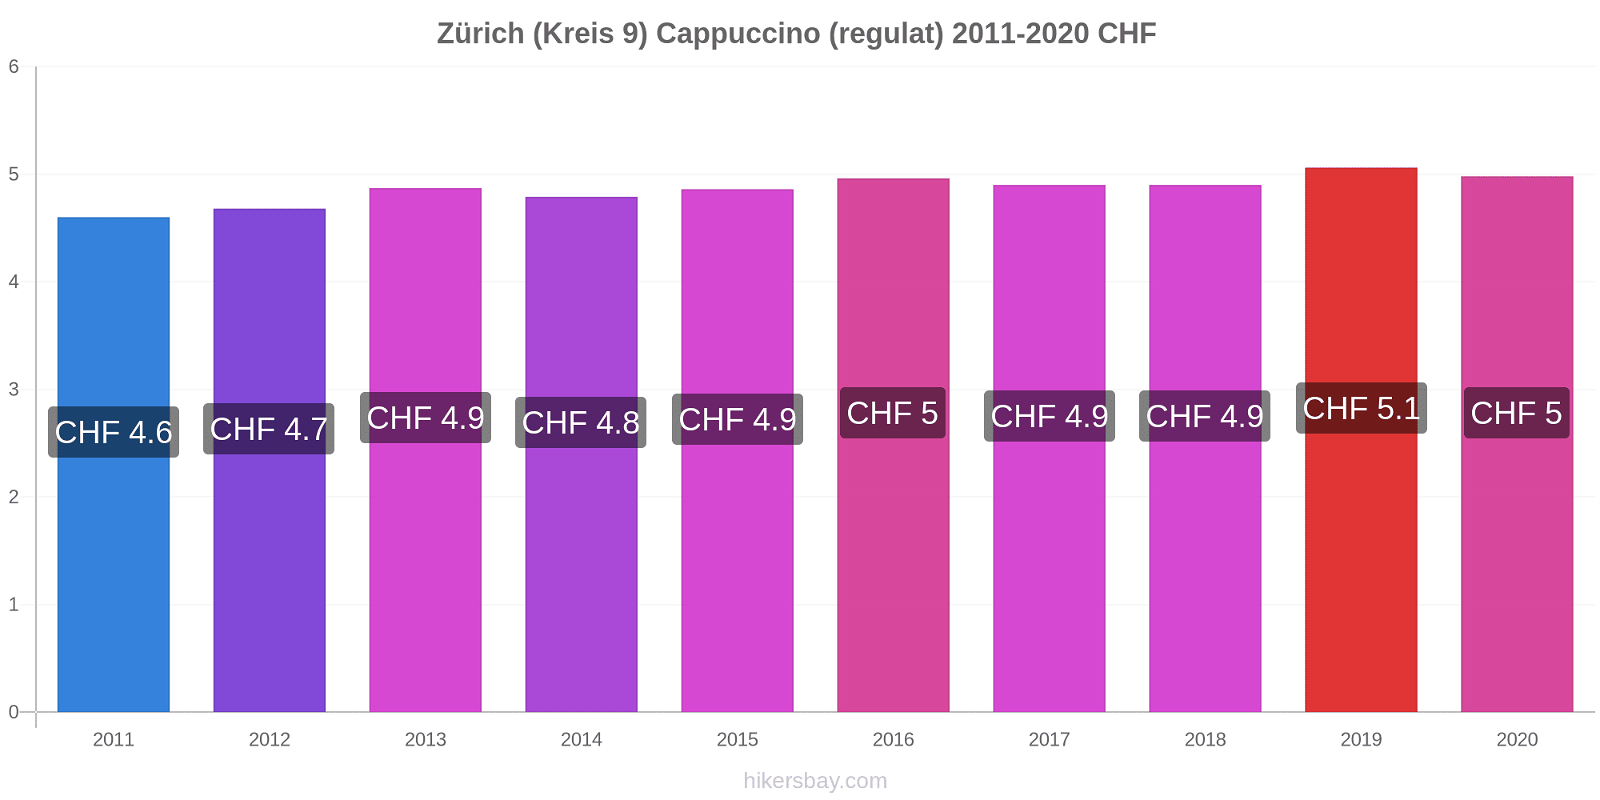 Zürich (Kreis 9) modificări de preț Cappuccino (regulat) hikersbay.com